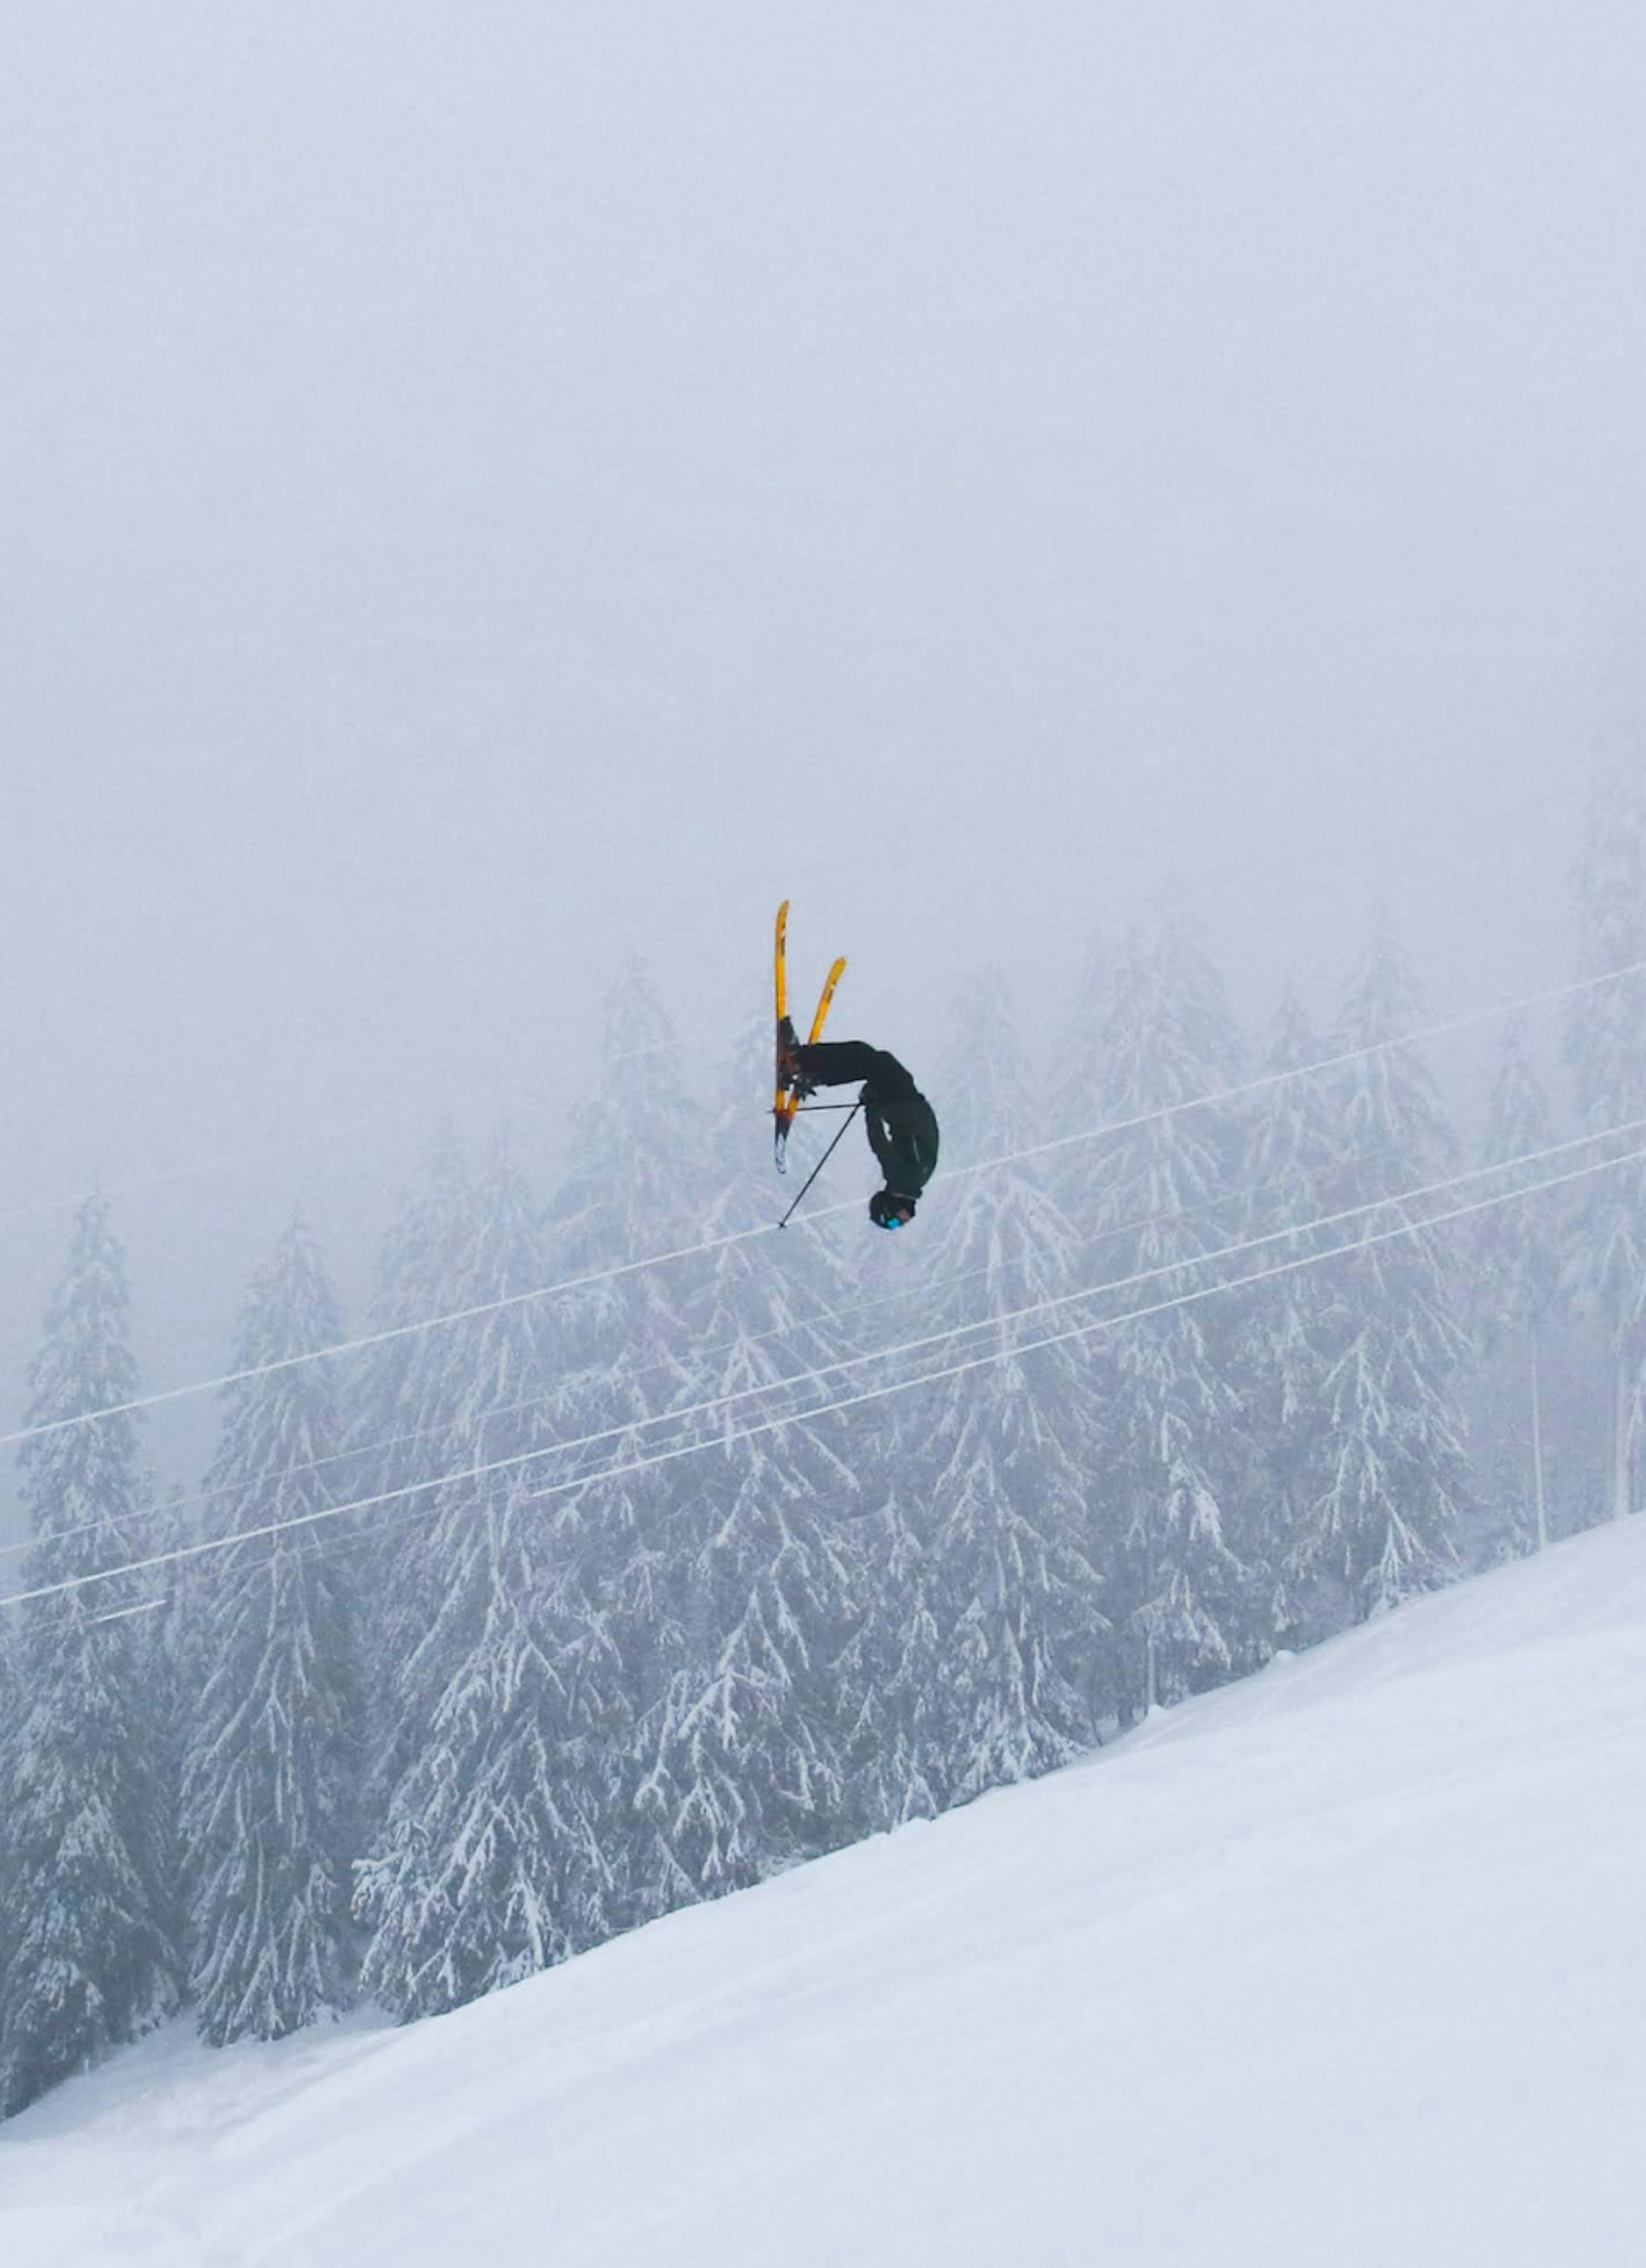 A skier doing a backflip.